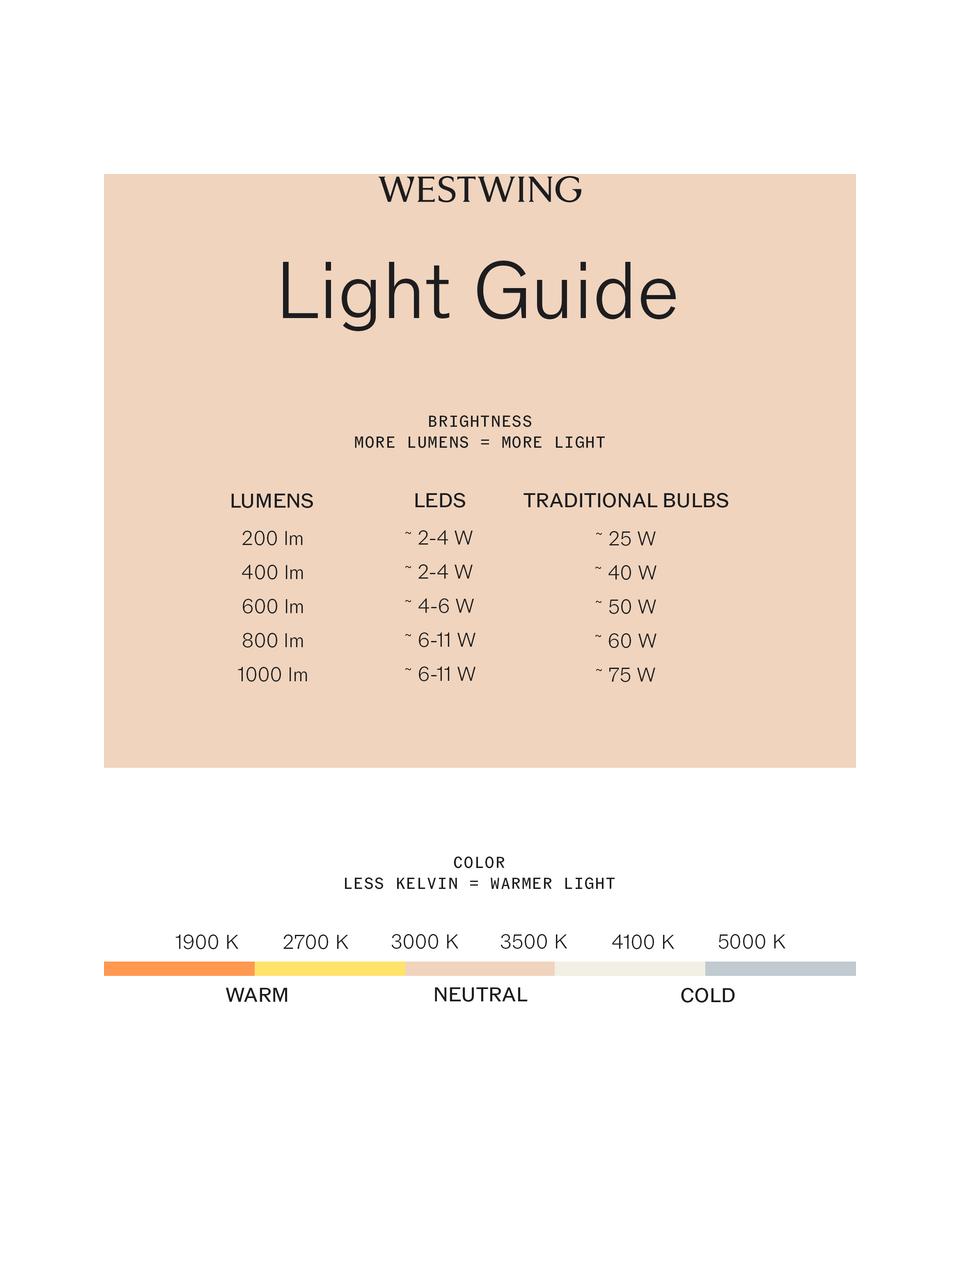 Dimmbare LED-Tischlampe Taccia, Lampenschirm: Kunststoff, Silberfarben, Transparent, Ø 50 x H 65 cm